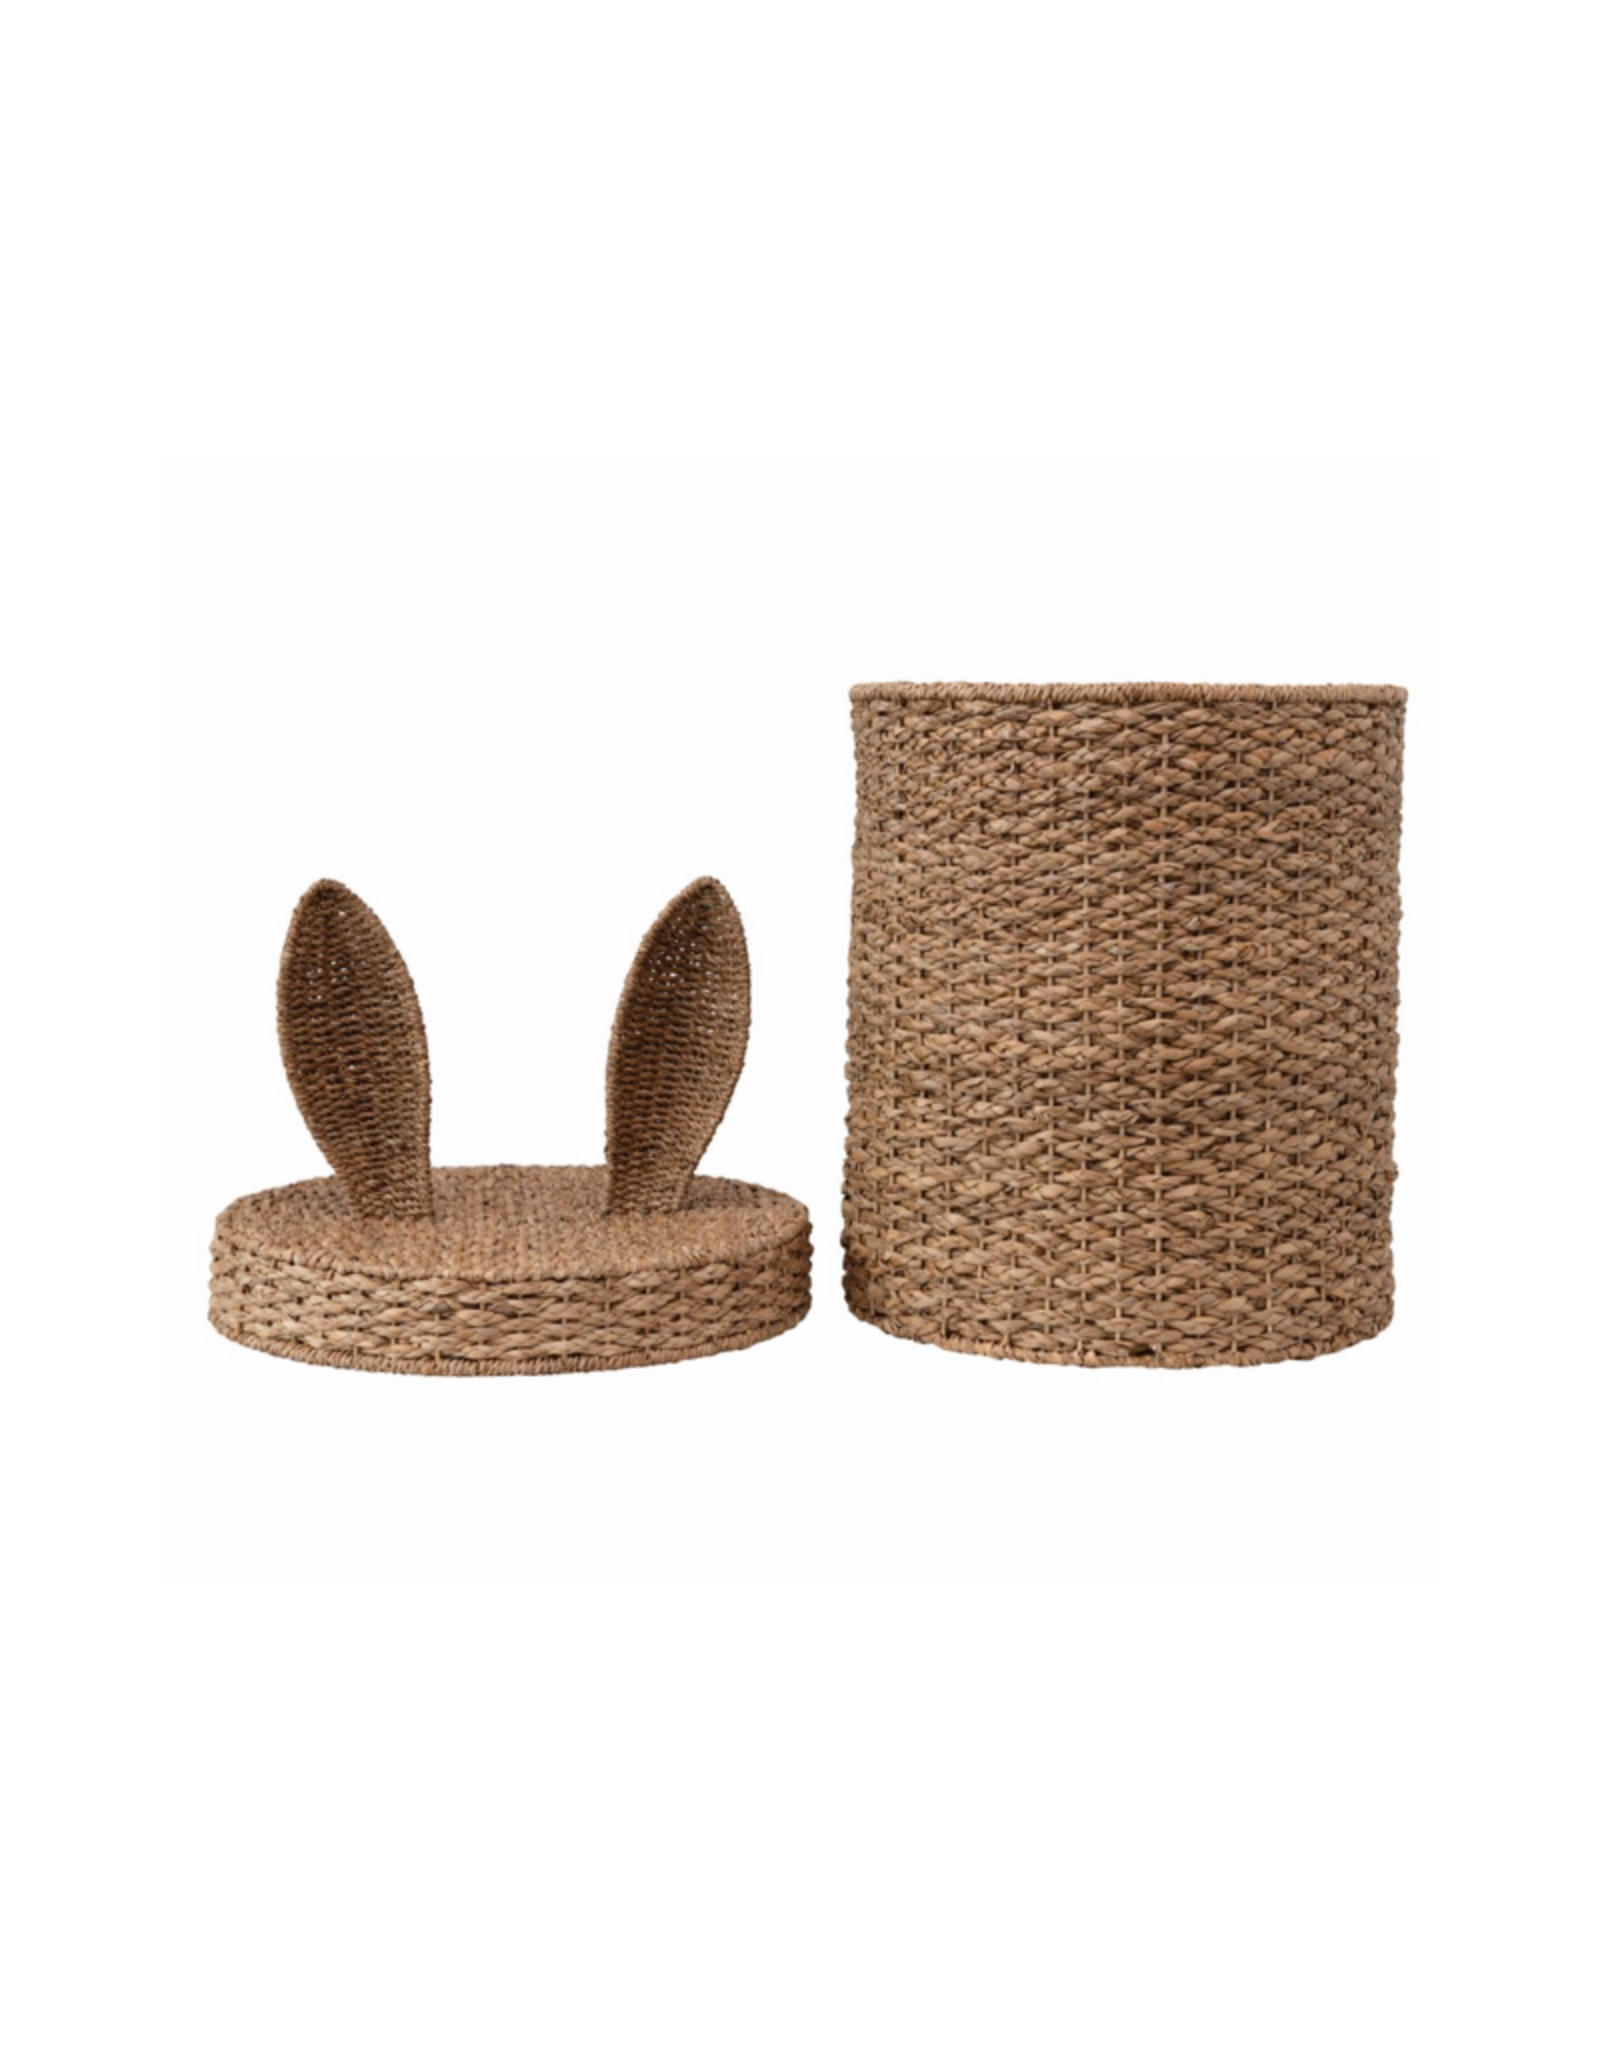 Lidded Bunny Ear Basket